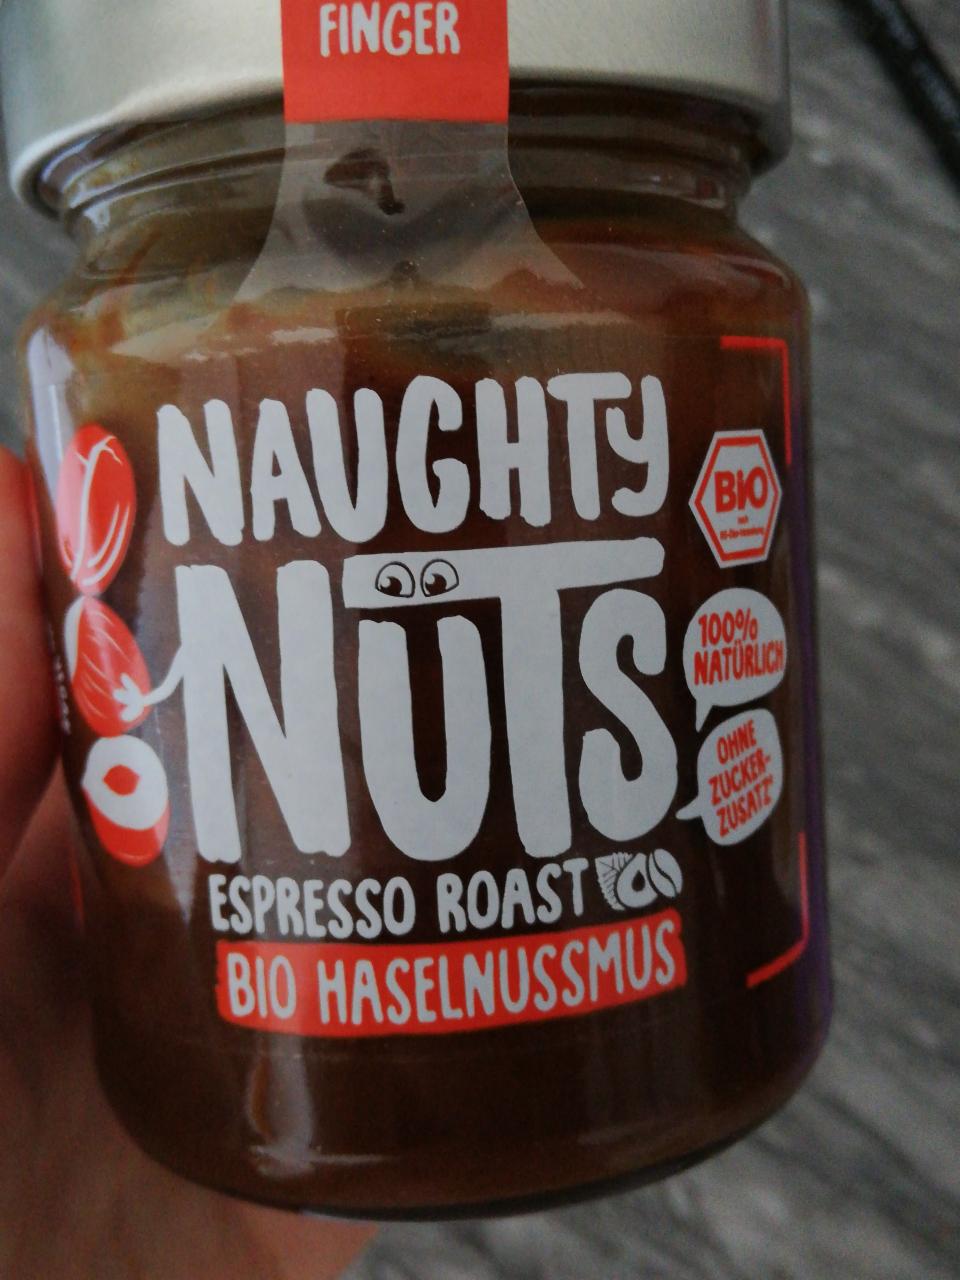 Fotografie - Naughty nuts espresso roast bio haselnussmus